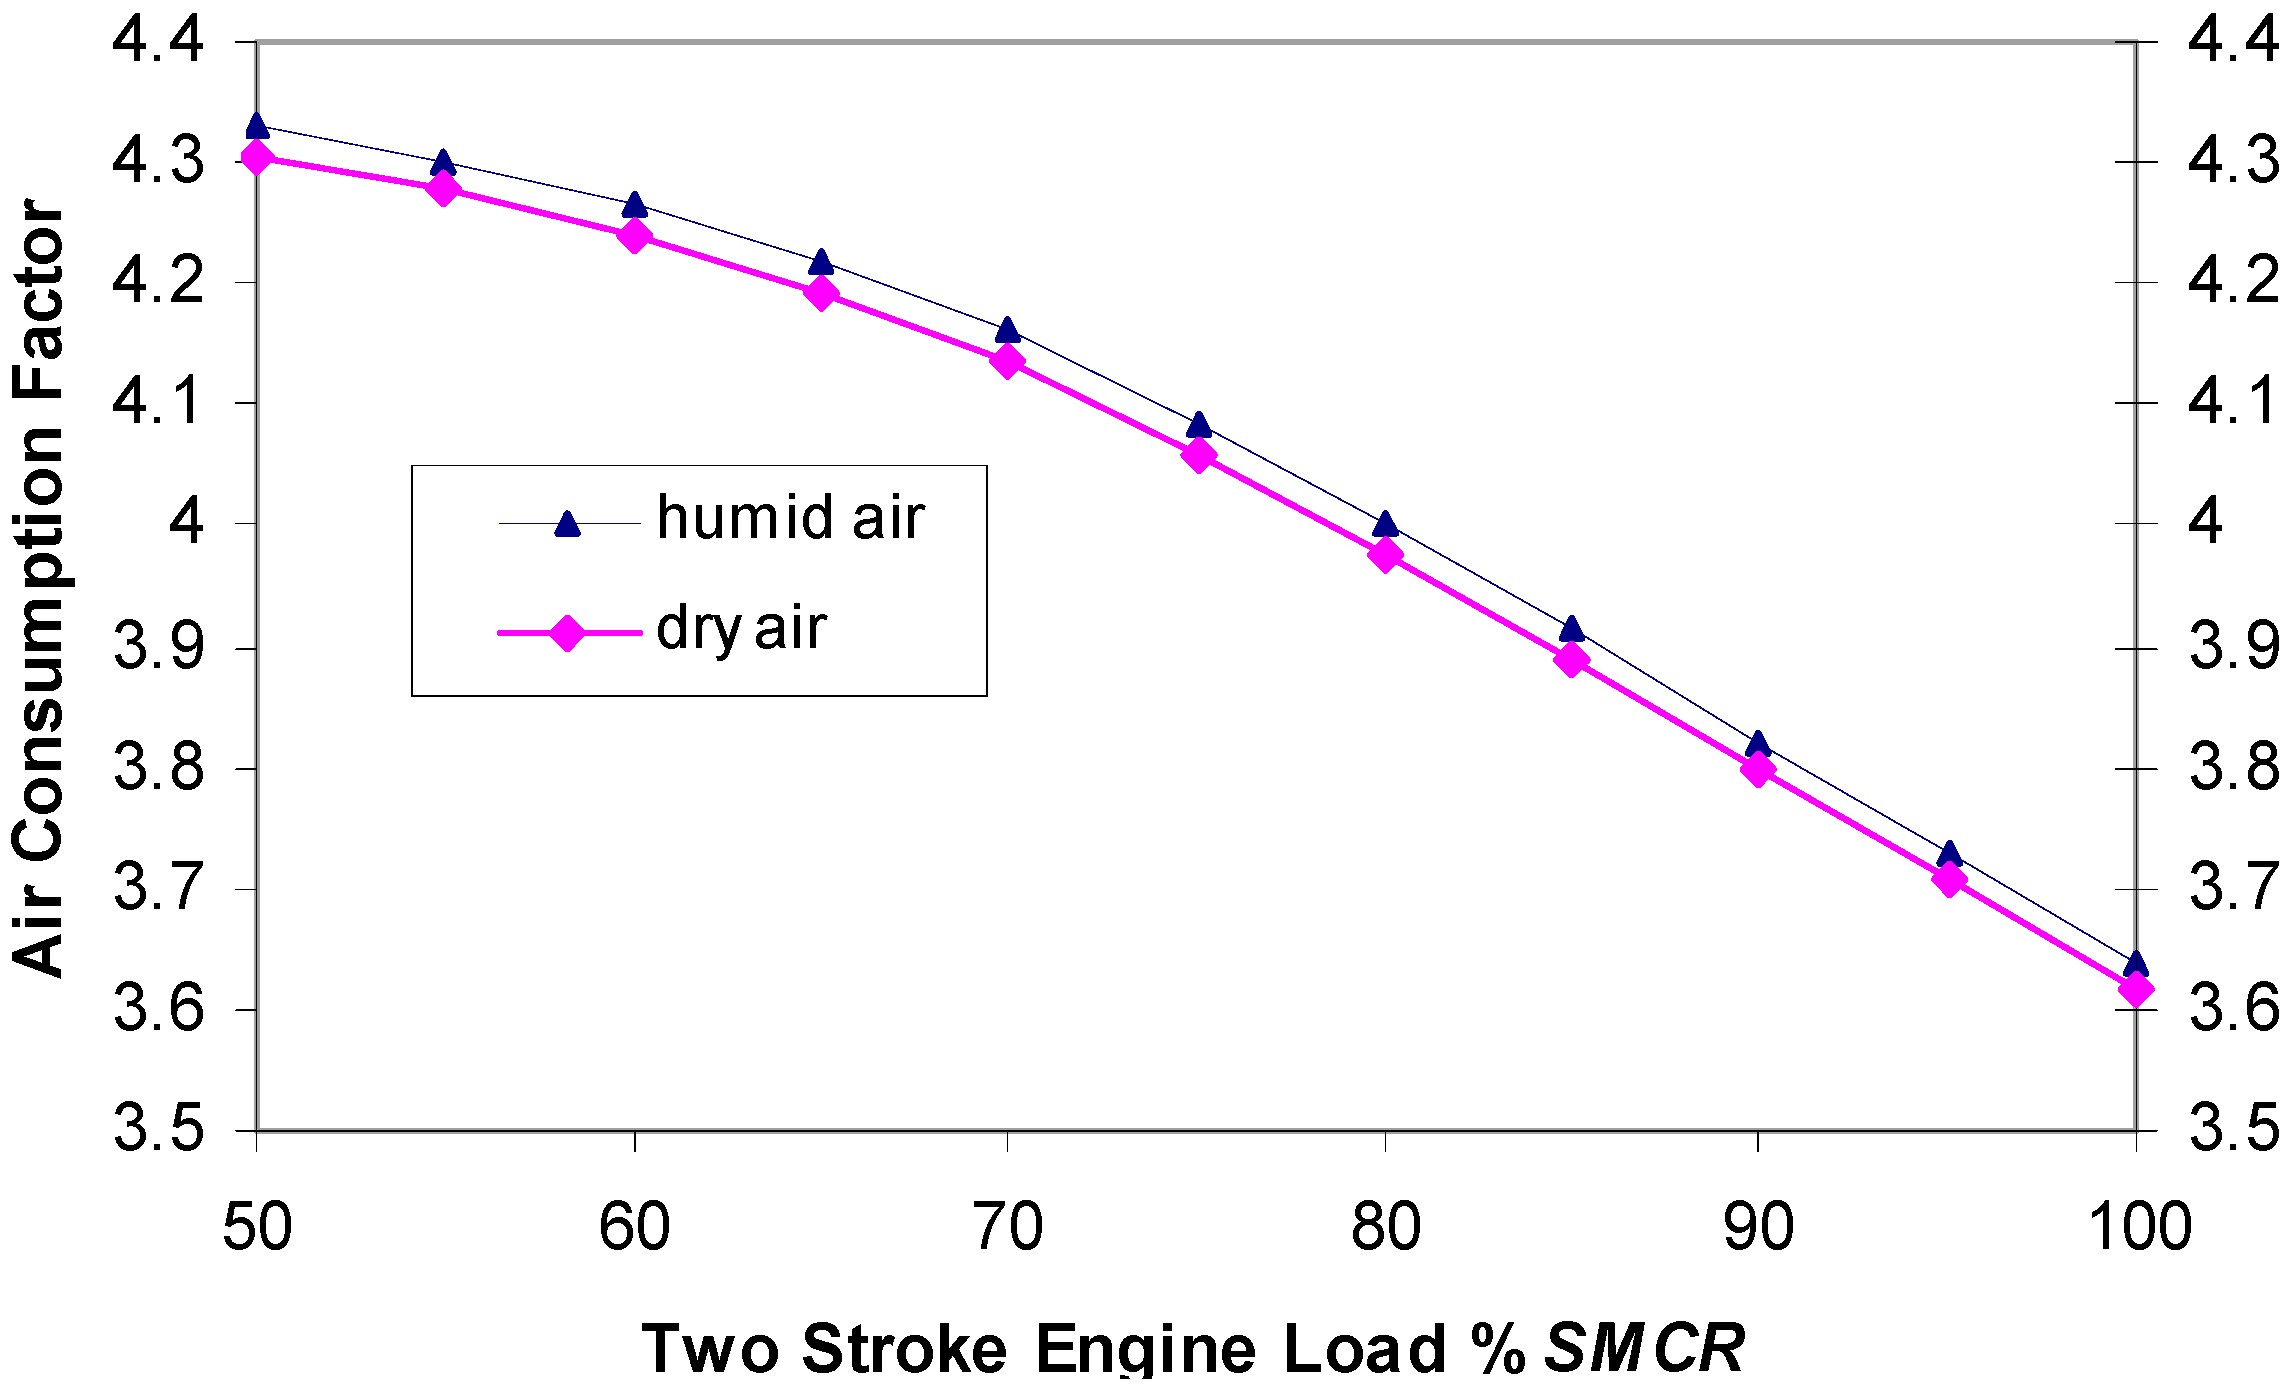 2 Stroke Marine Diesel Engine Timing Diagram Energies Free Full Text Of 2 Stroke Marine Diesel Engine Timing Diagram